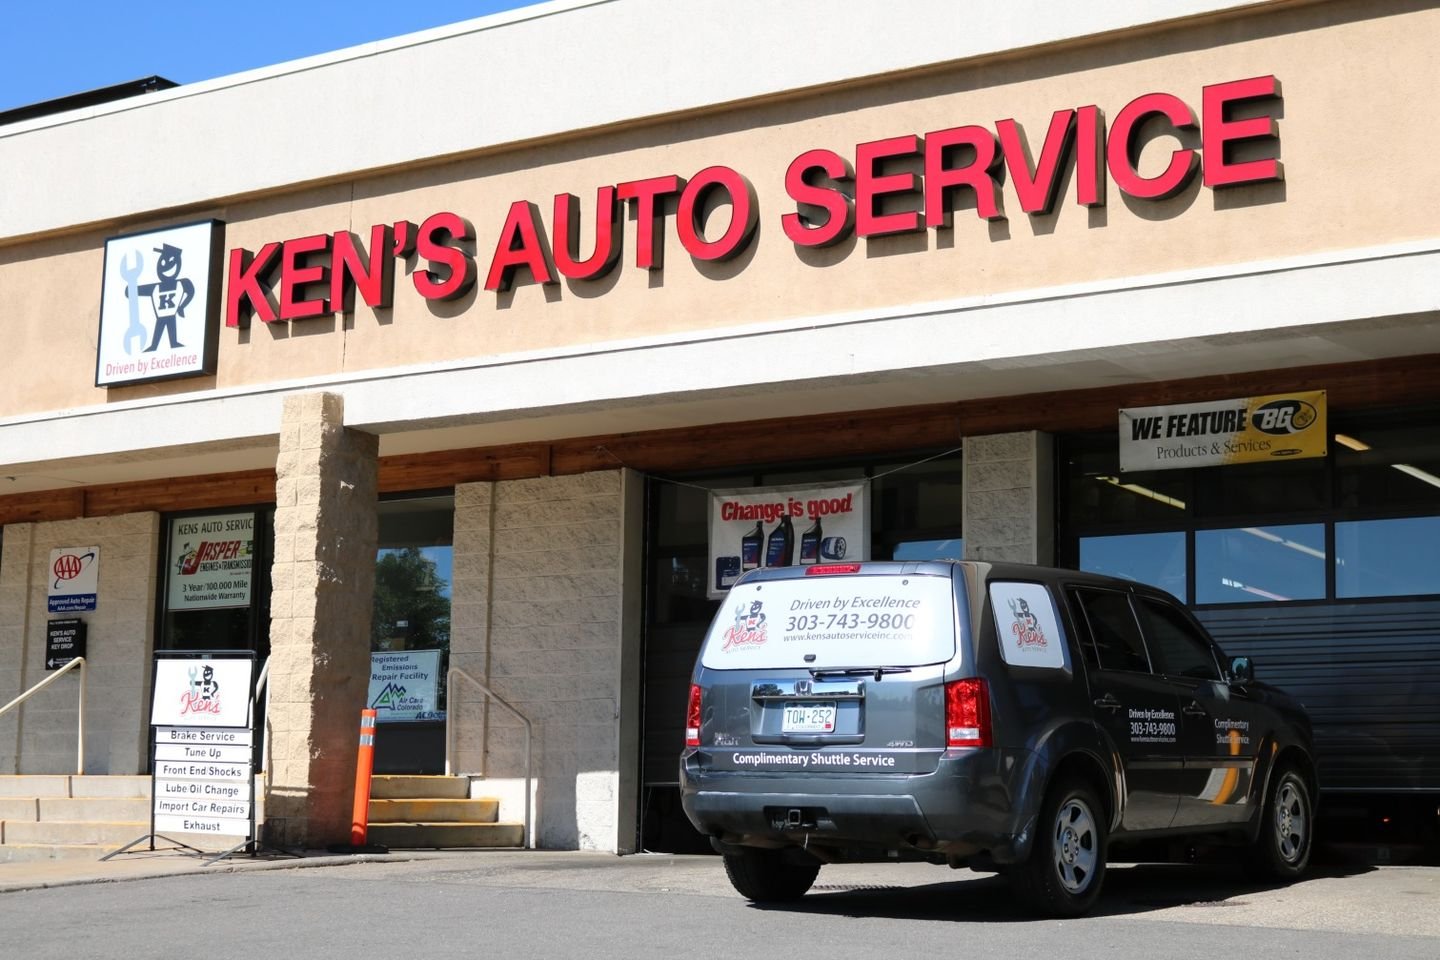 Ken's Auto Service